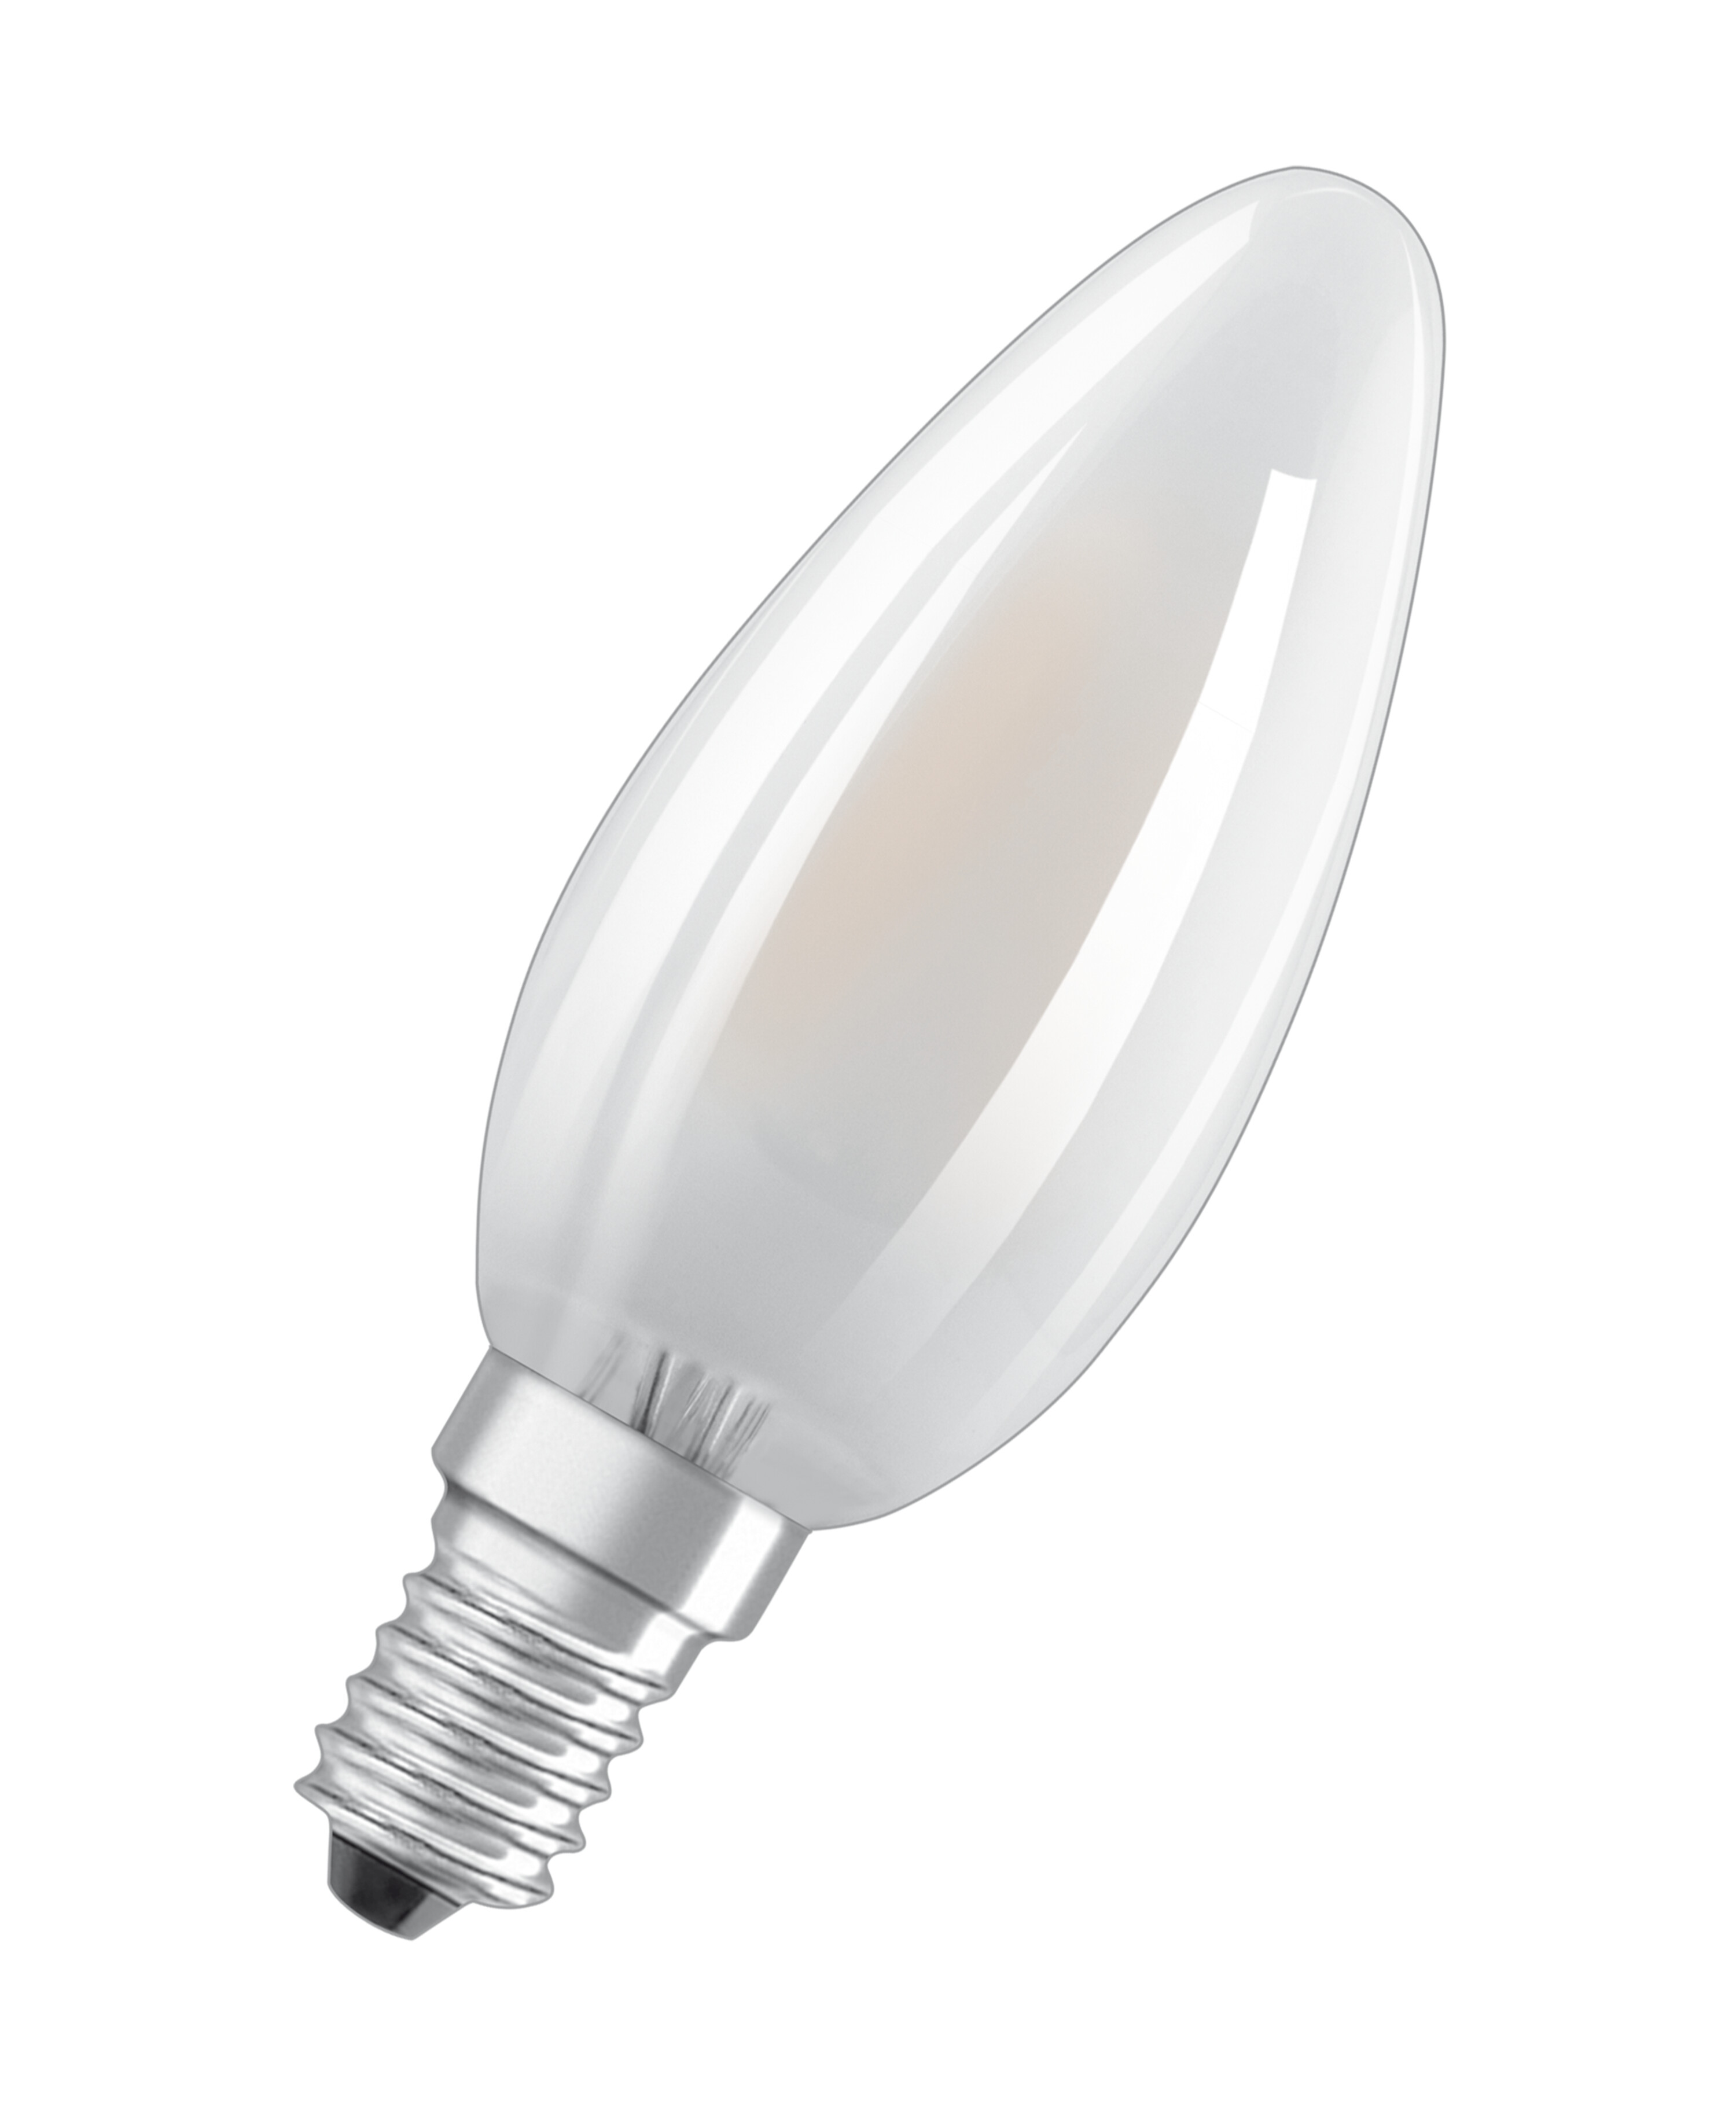 OSRAM  LED Retrofit CLASSIC B LED 250 Lumen Kaltweiß Lampe